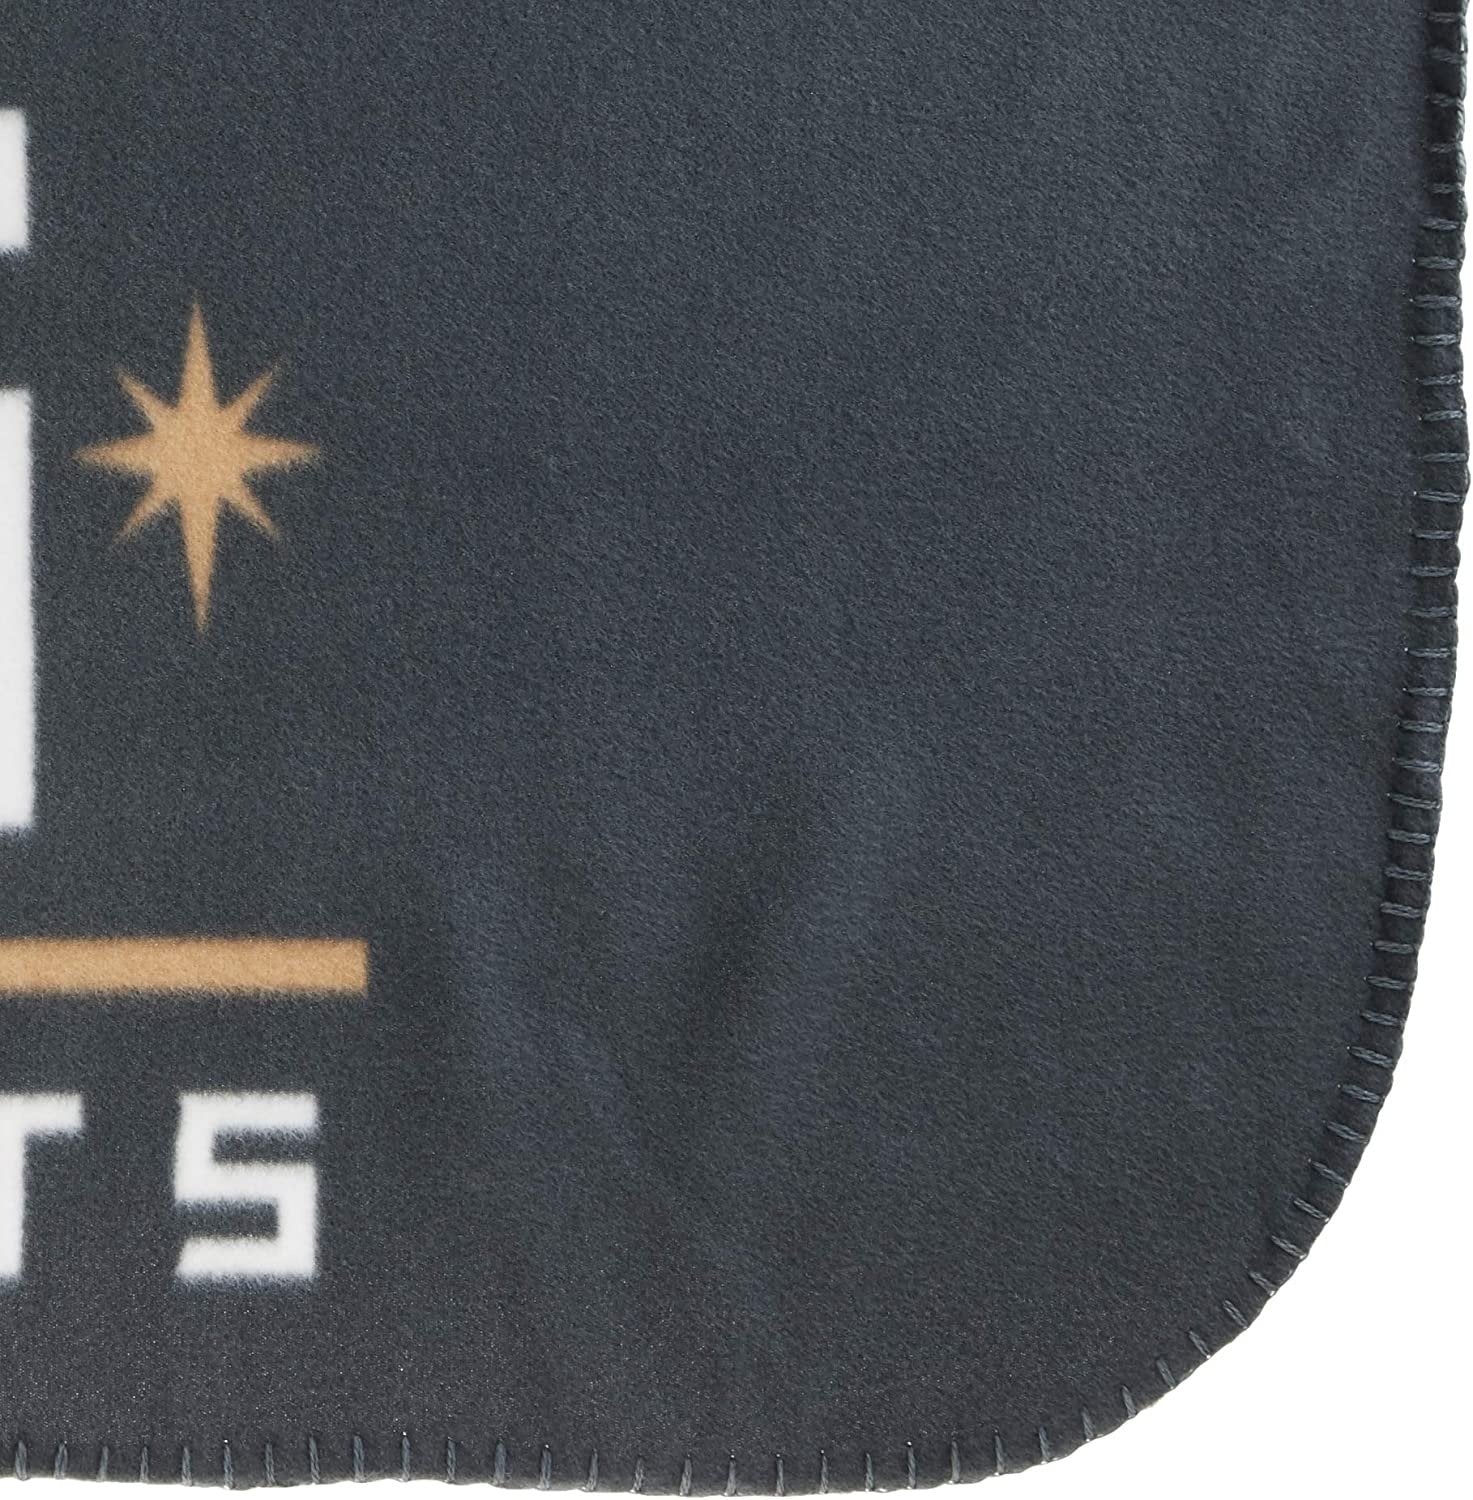 Las Vegas Golden Knights Fleece Throw Blanket, 50x60 Inch, Fade Design, Lightweight